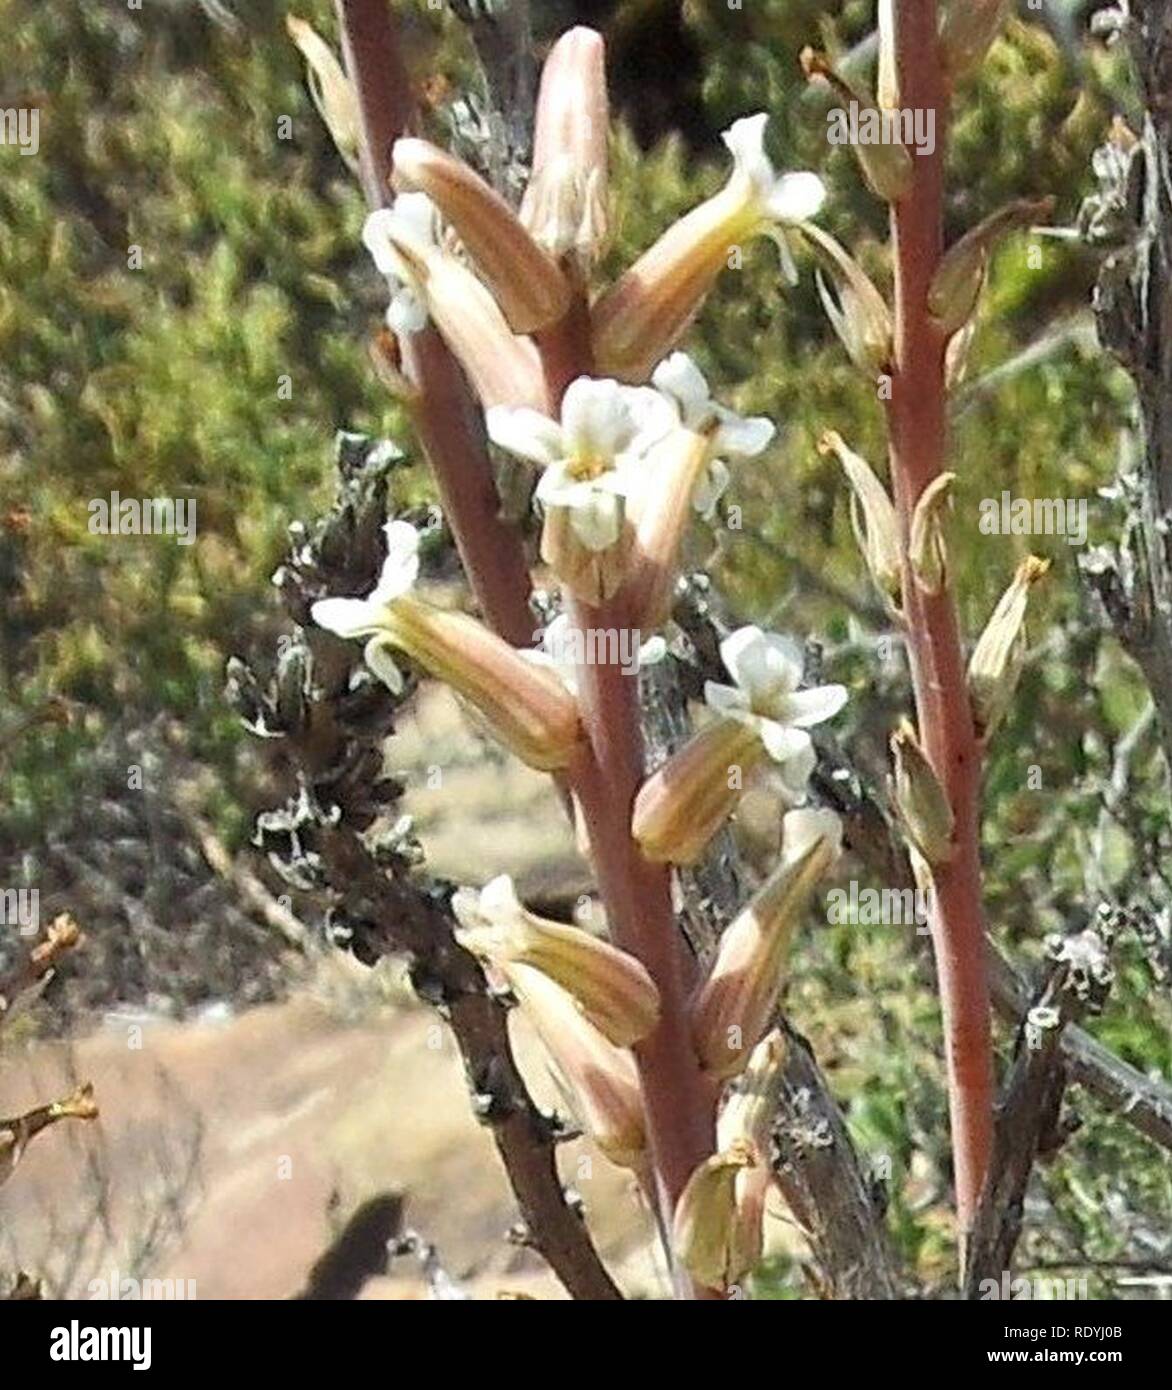 Astroloba robusta - inflorescence. Stock Photo